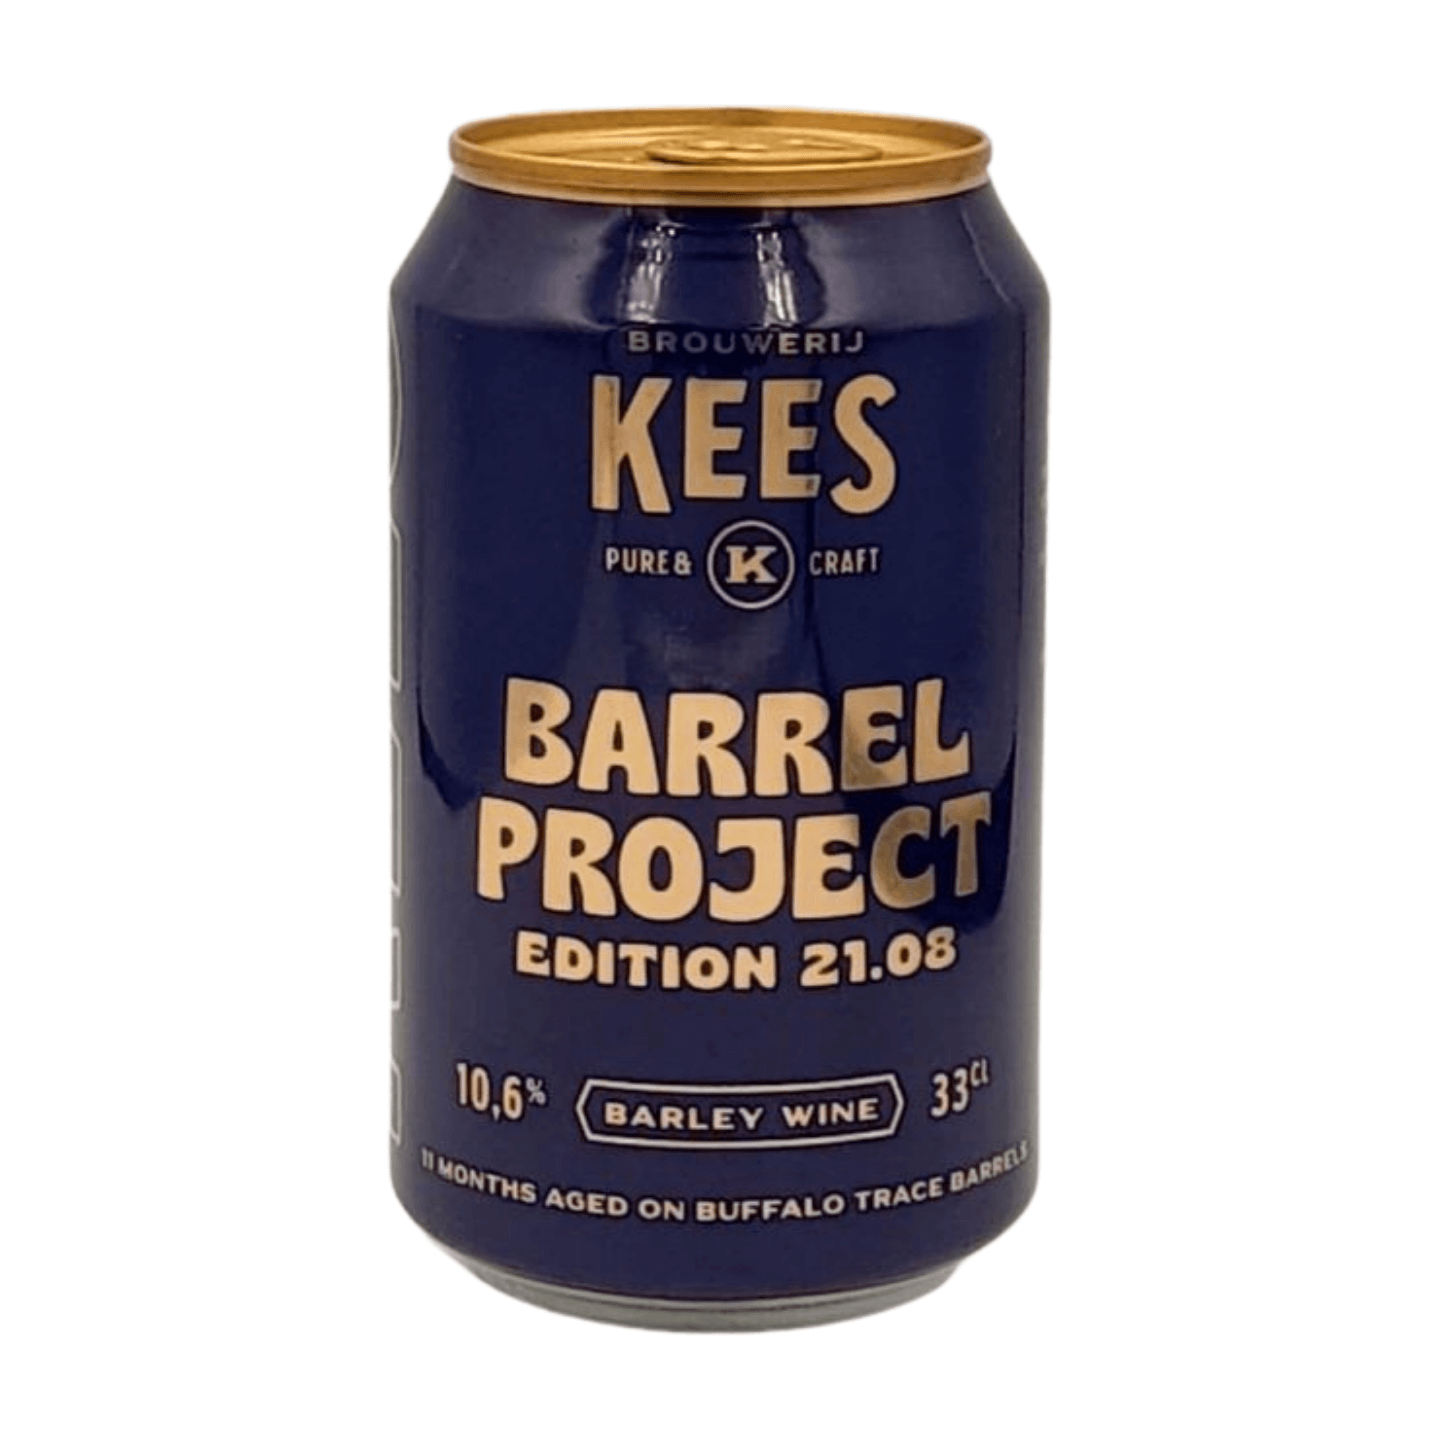 Kees Barrel Project 21.08 | Buffalo Tracé BA Barley Wine Webshop Online Verdins Bierwinkel Rotterdam